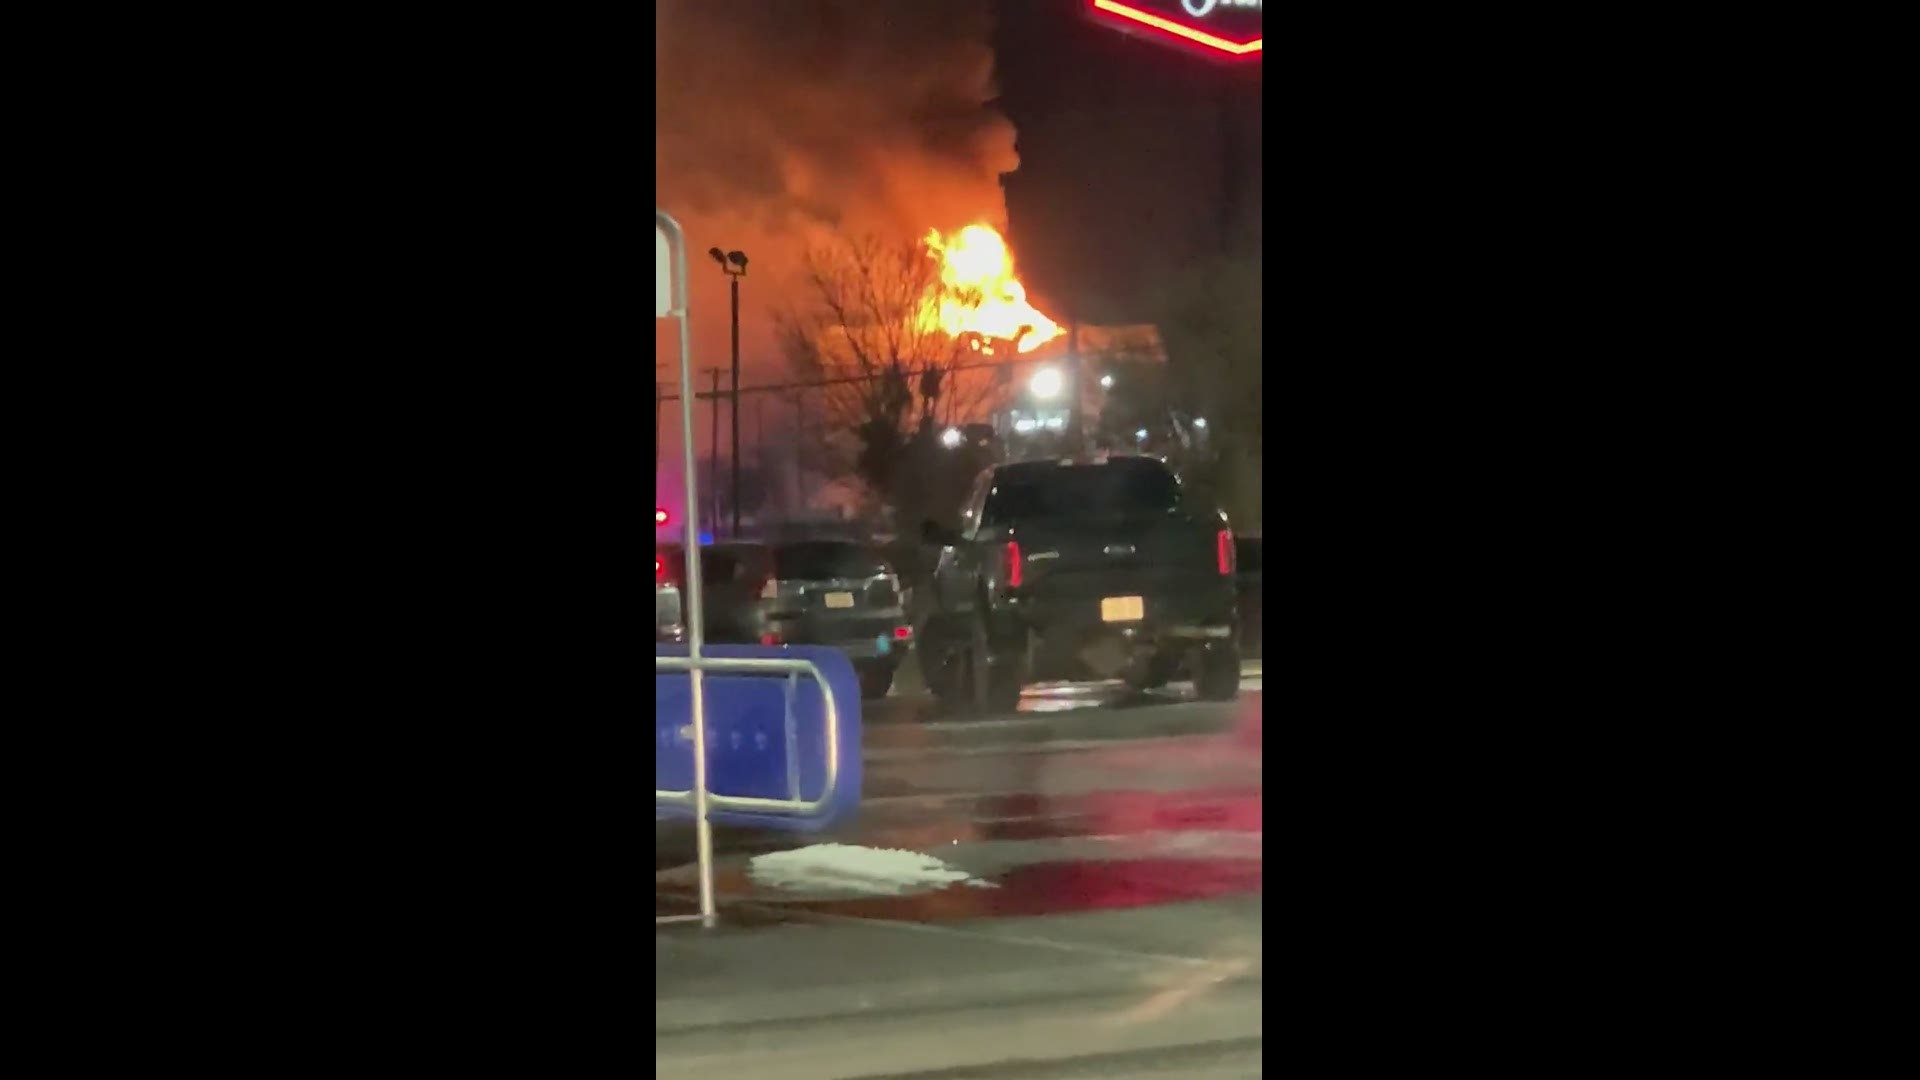 Hilton Garden Inn in Killeen catches fire
Credit: Roy Johnson